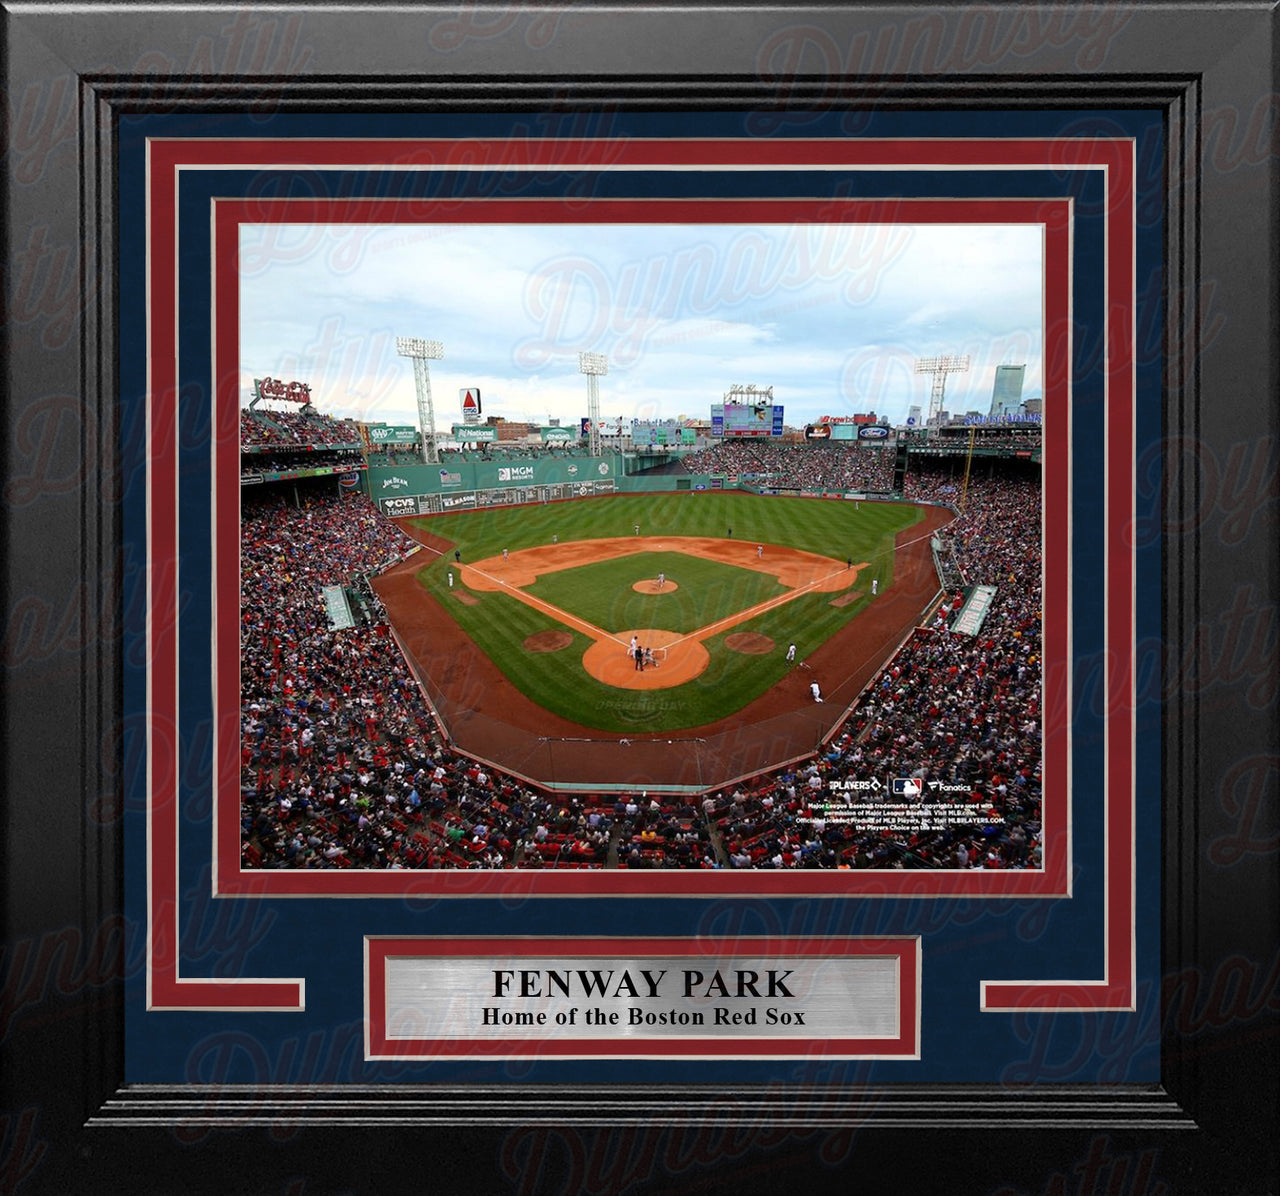 Boston Red Sox Fenway Park 8" x 10" Framed Baseball Stadium Photo - Dynasty Sports & Framing 